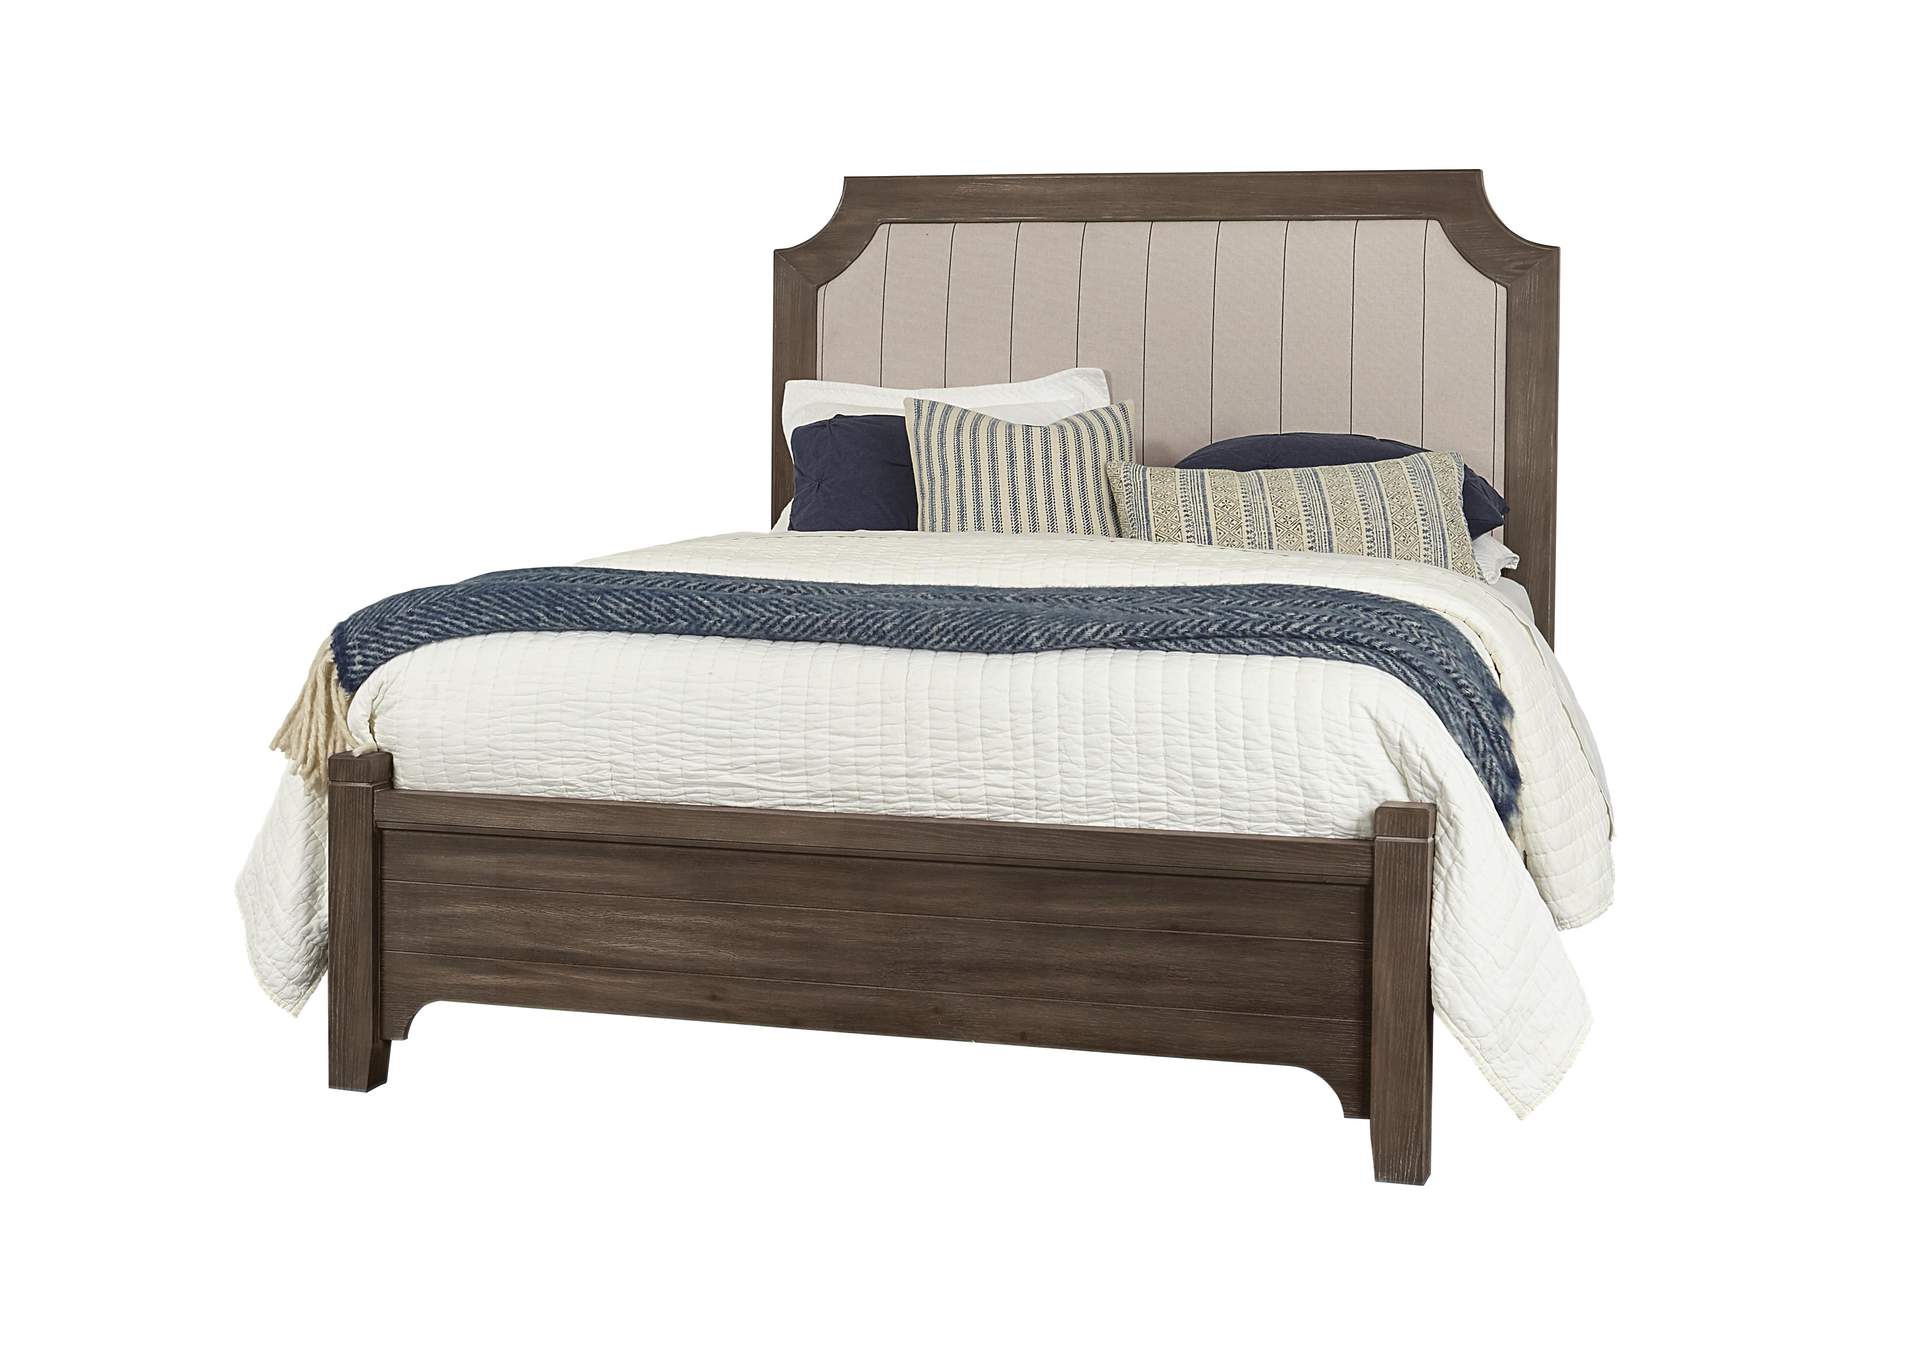 Bungalow Cararra Upholstered King Bed,Vaughan-Bassett